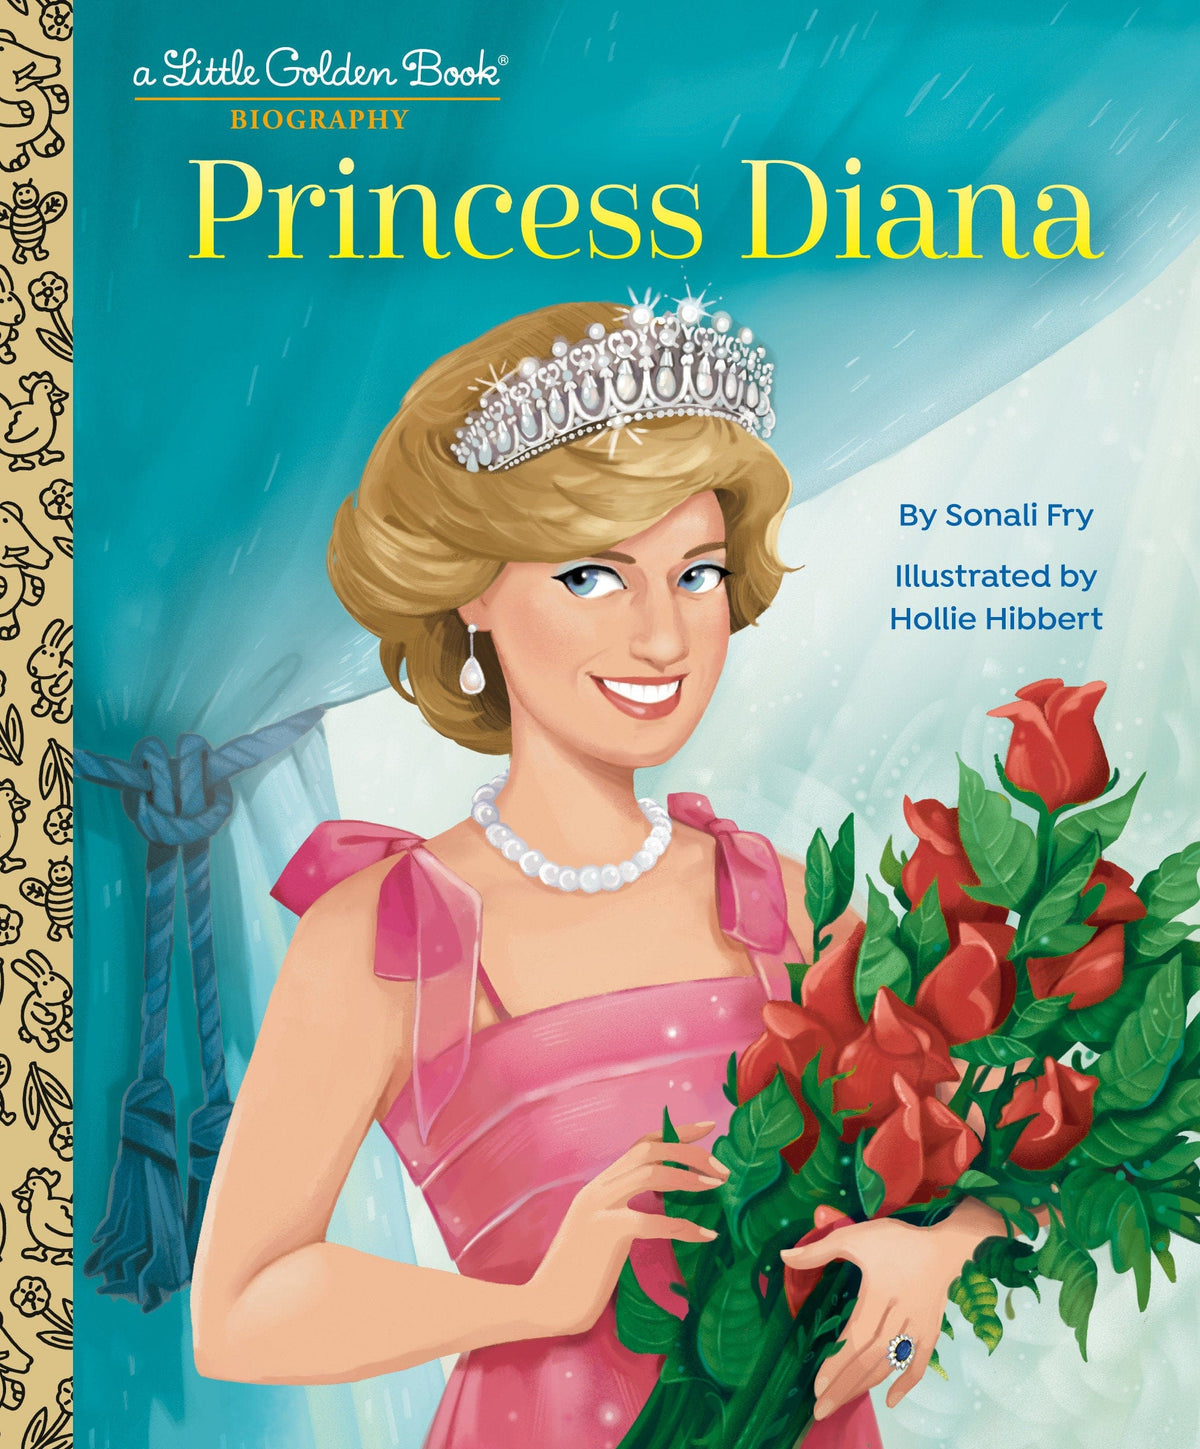 Princess Diana: A Little Golden Book Biography Hardcover